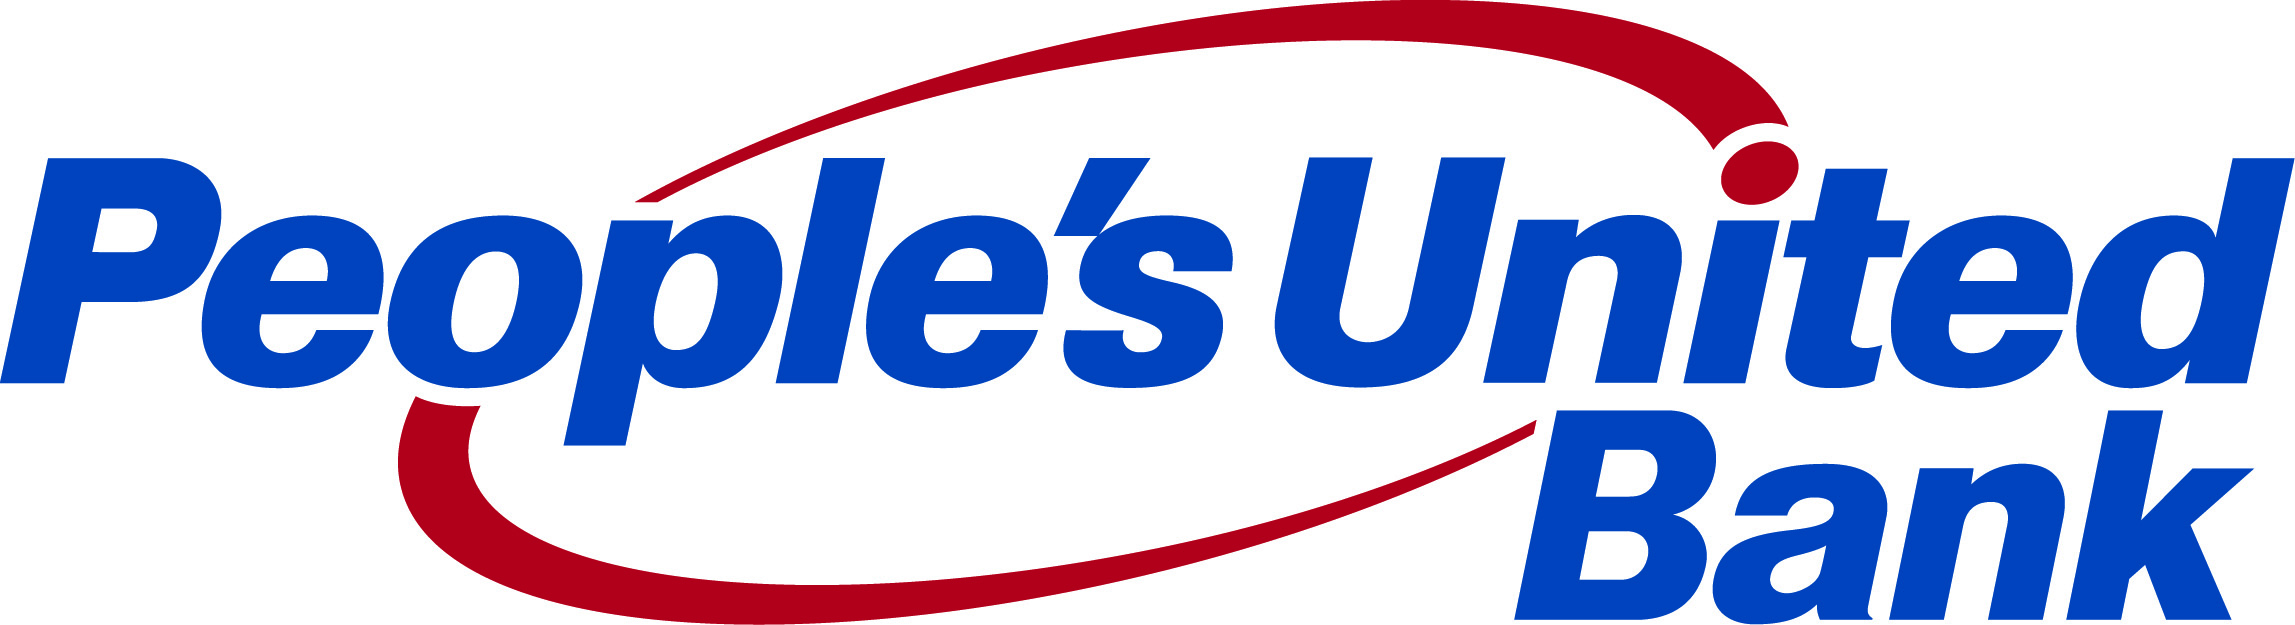 People's United Bank Brand Logo